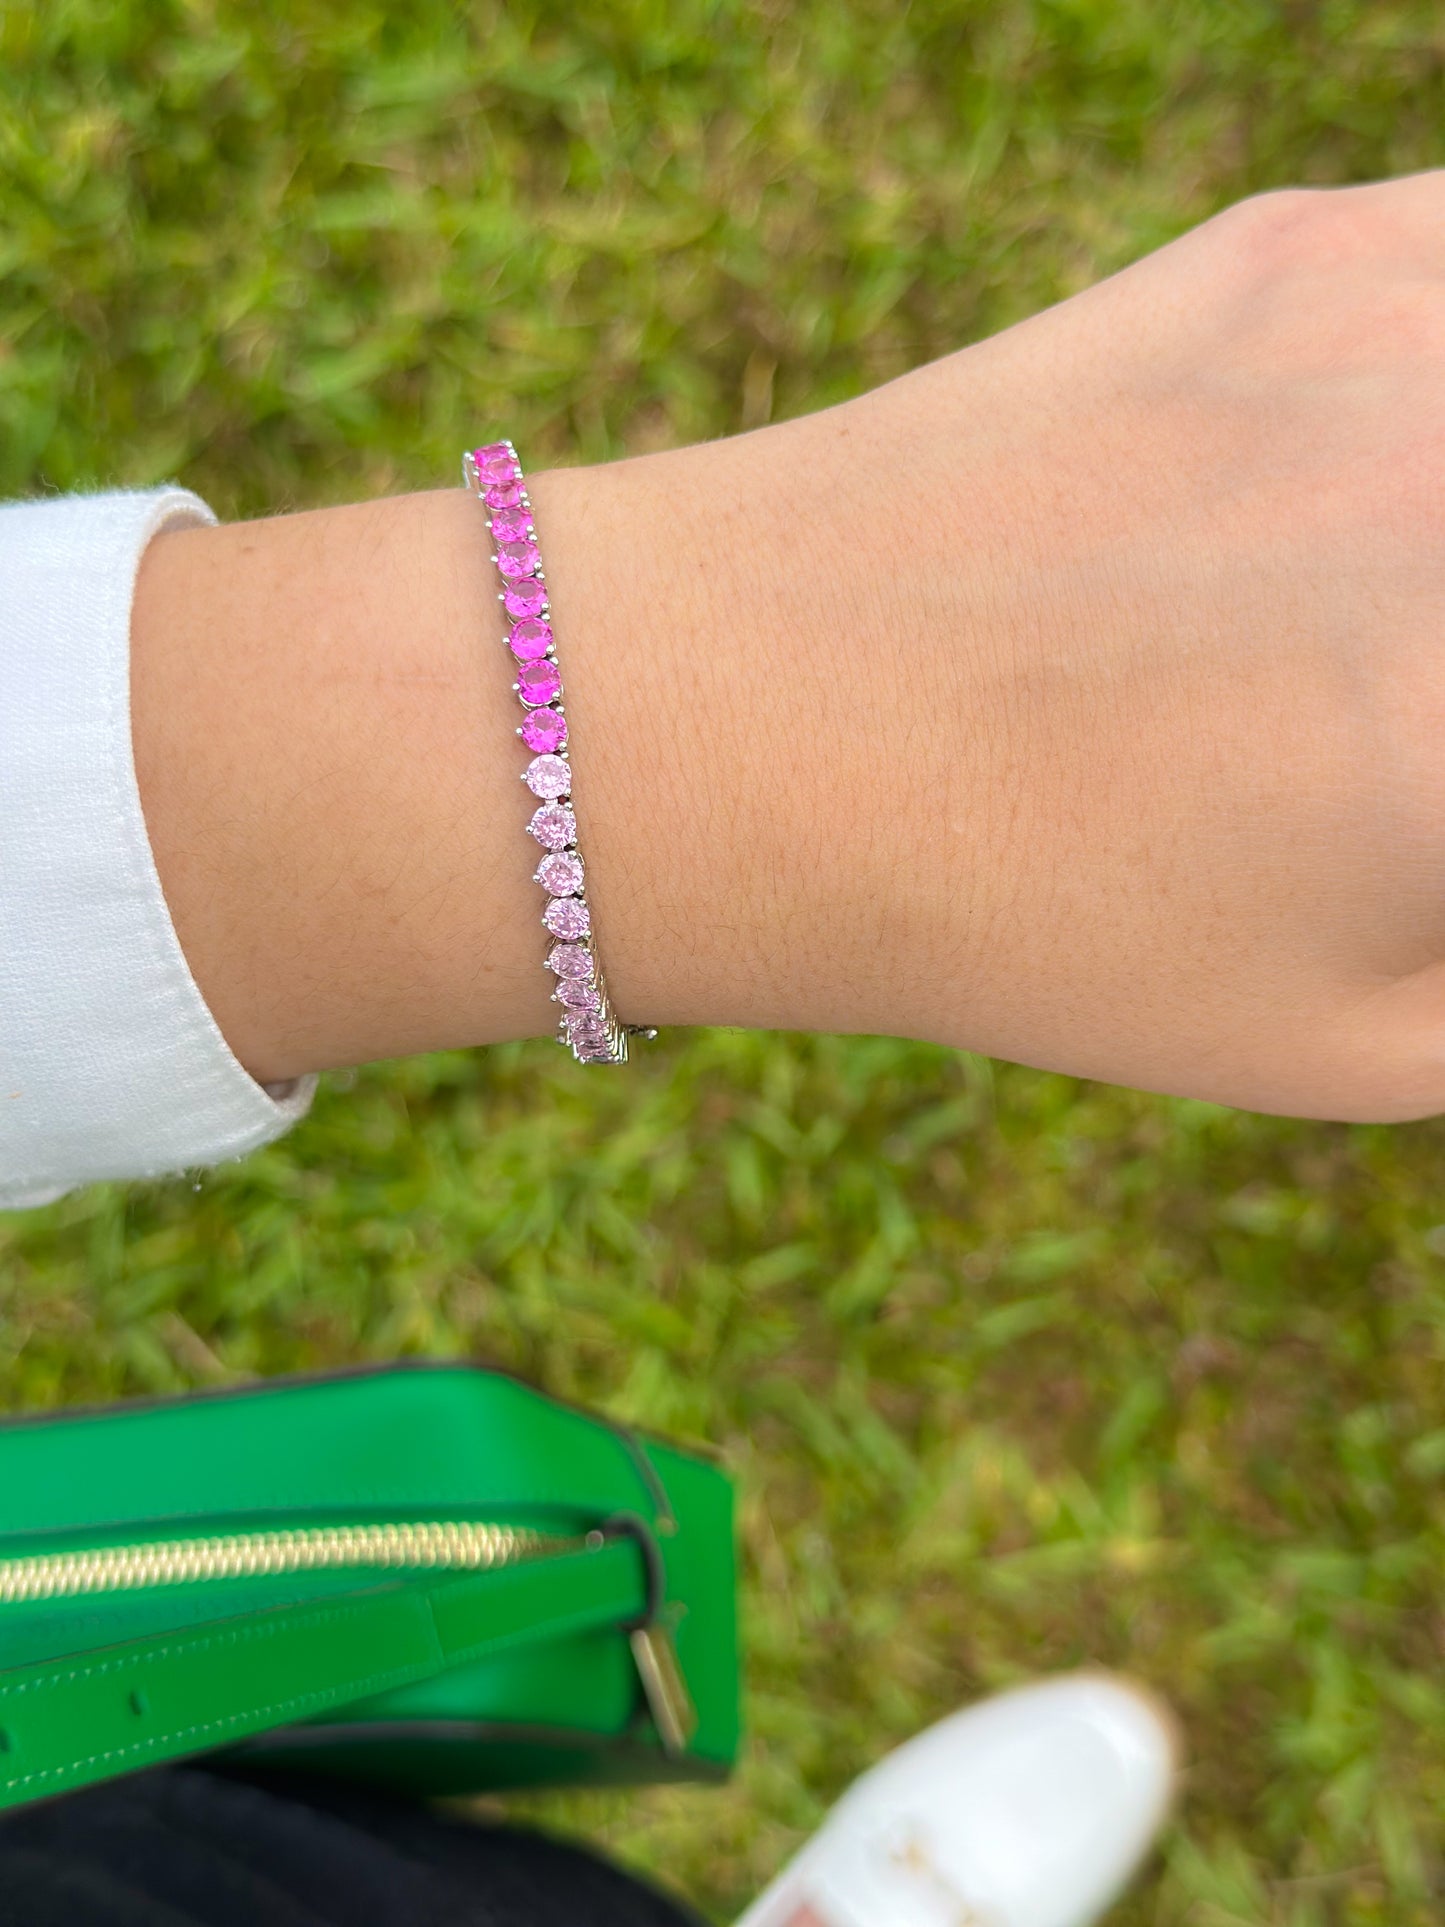 Pink tennis bracelet